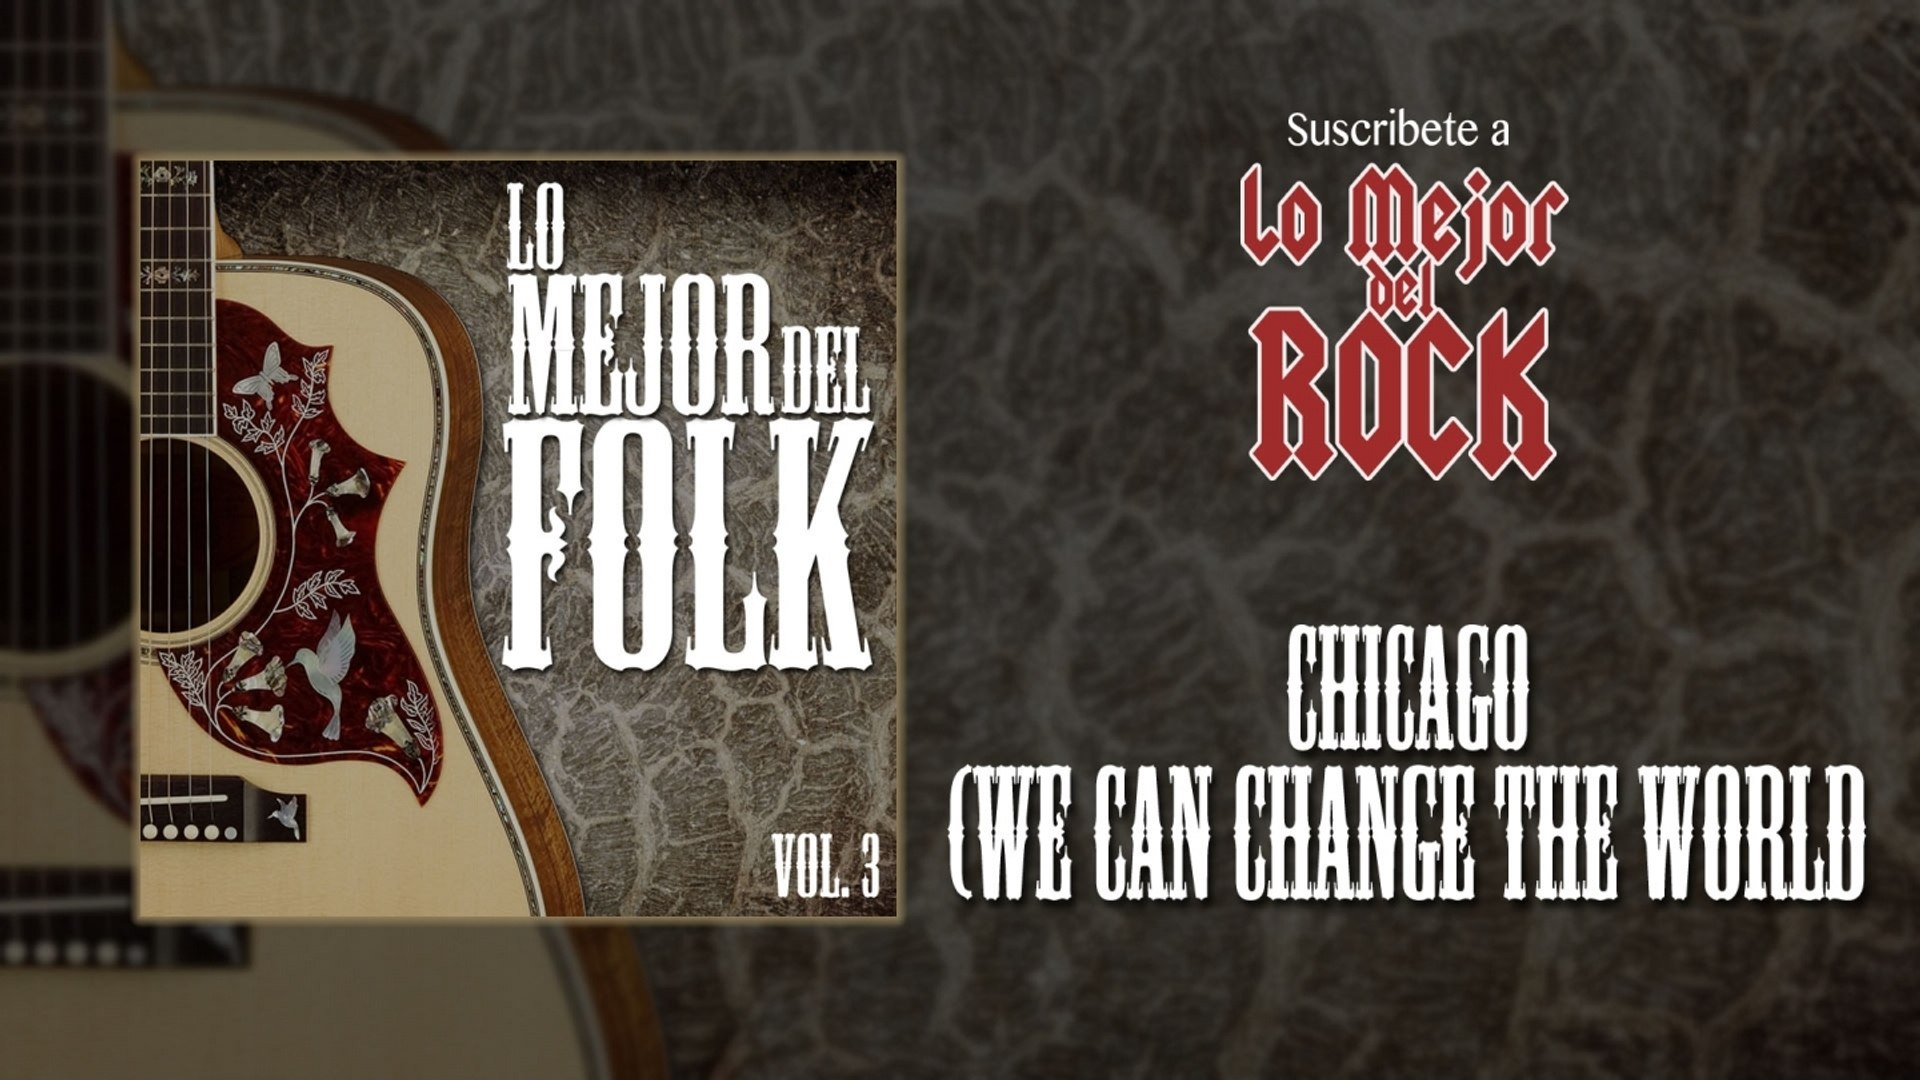 ⁣Lo Mejor del Folk, Vol. 3 - Chicago (We Can Change The World)